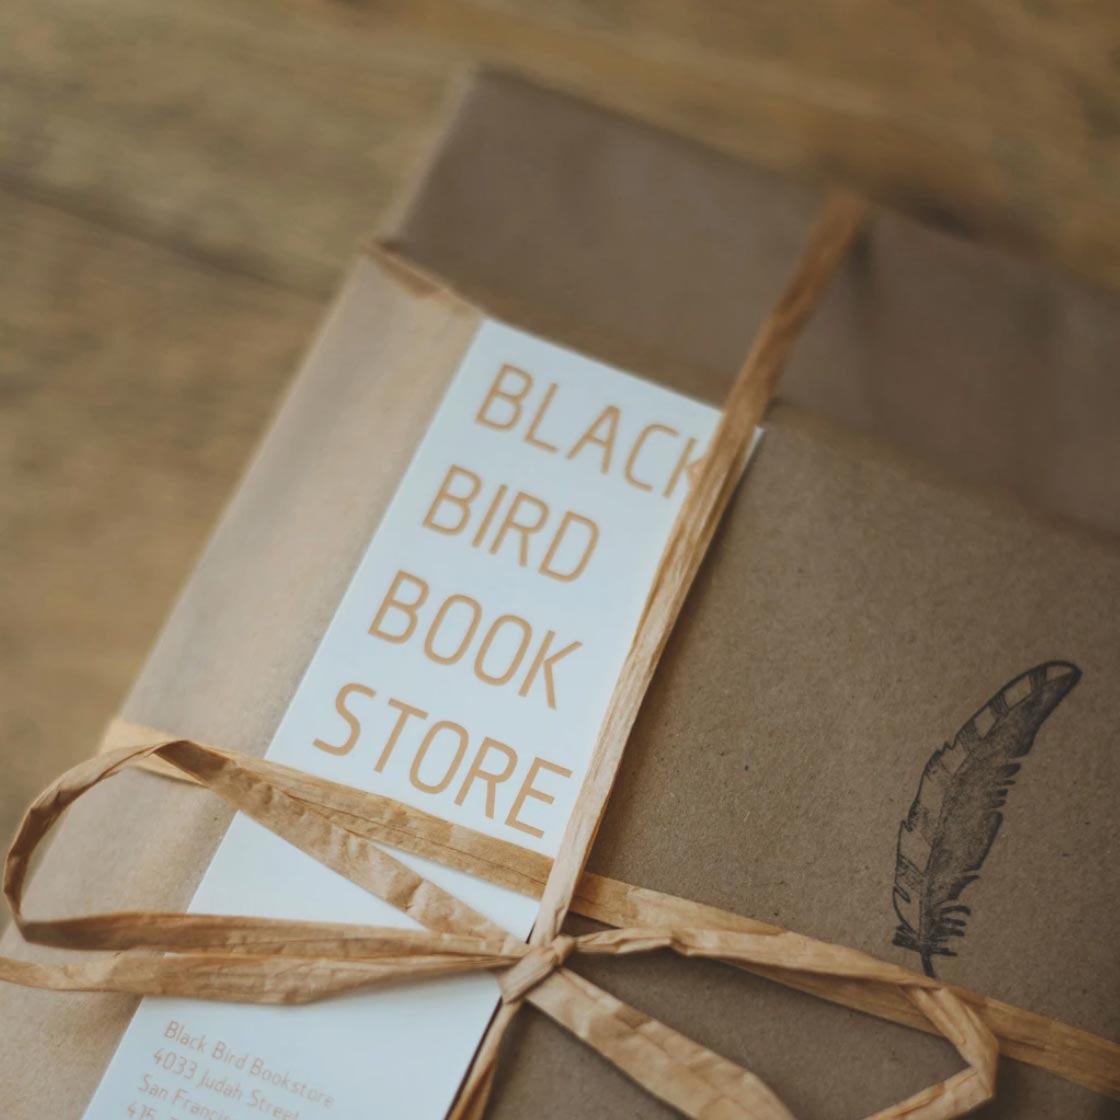 Customized Gift of Books – Black Bird Bookstore